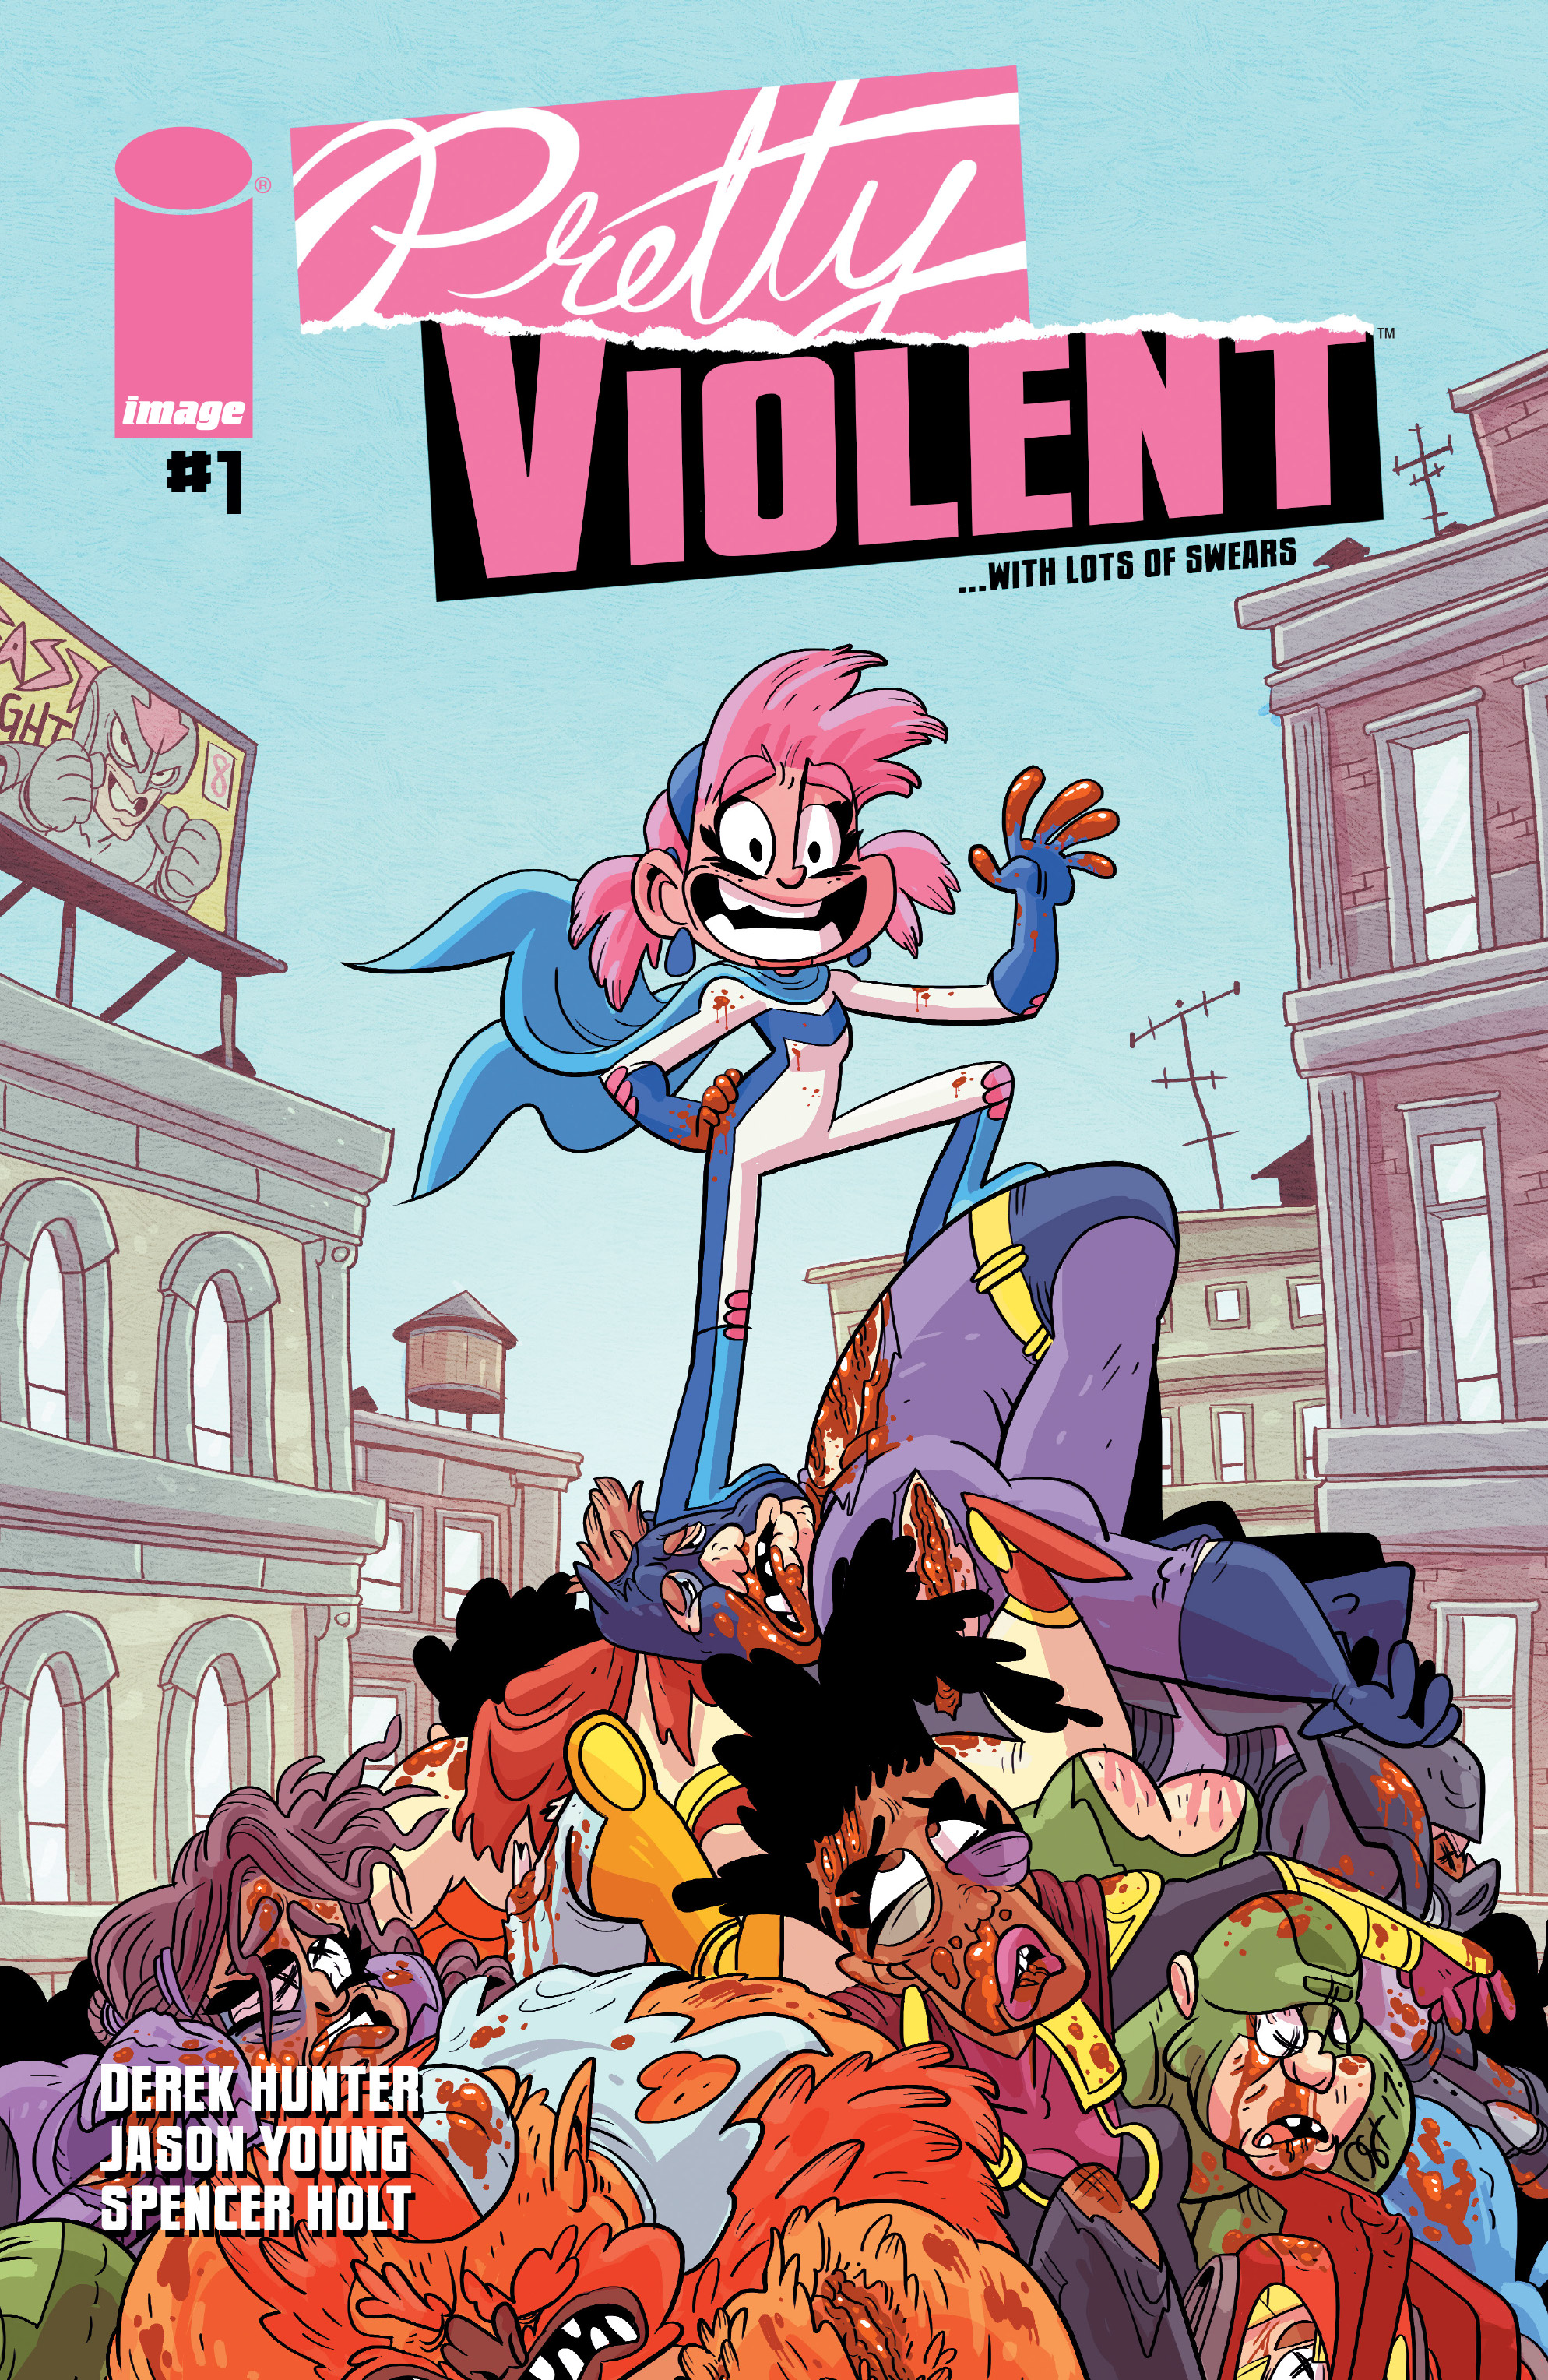 Read online Pretty Violent comic -  Issue #1 - 1